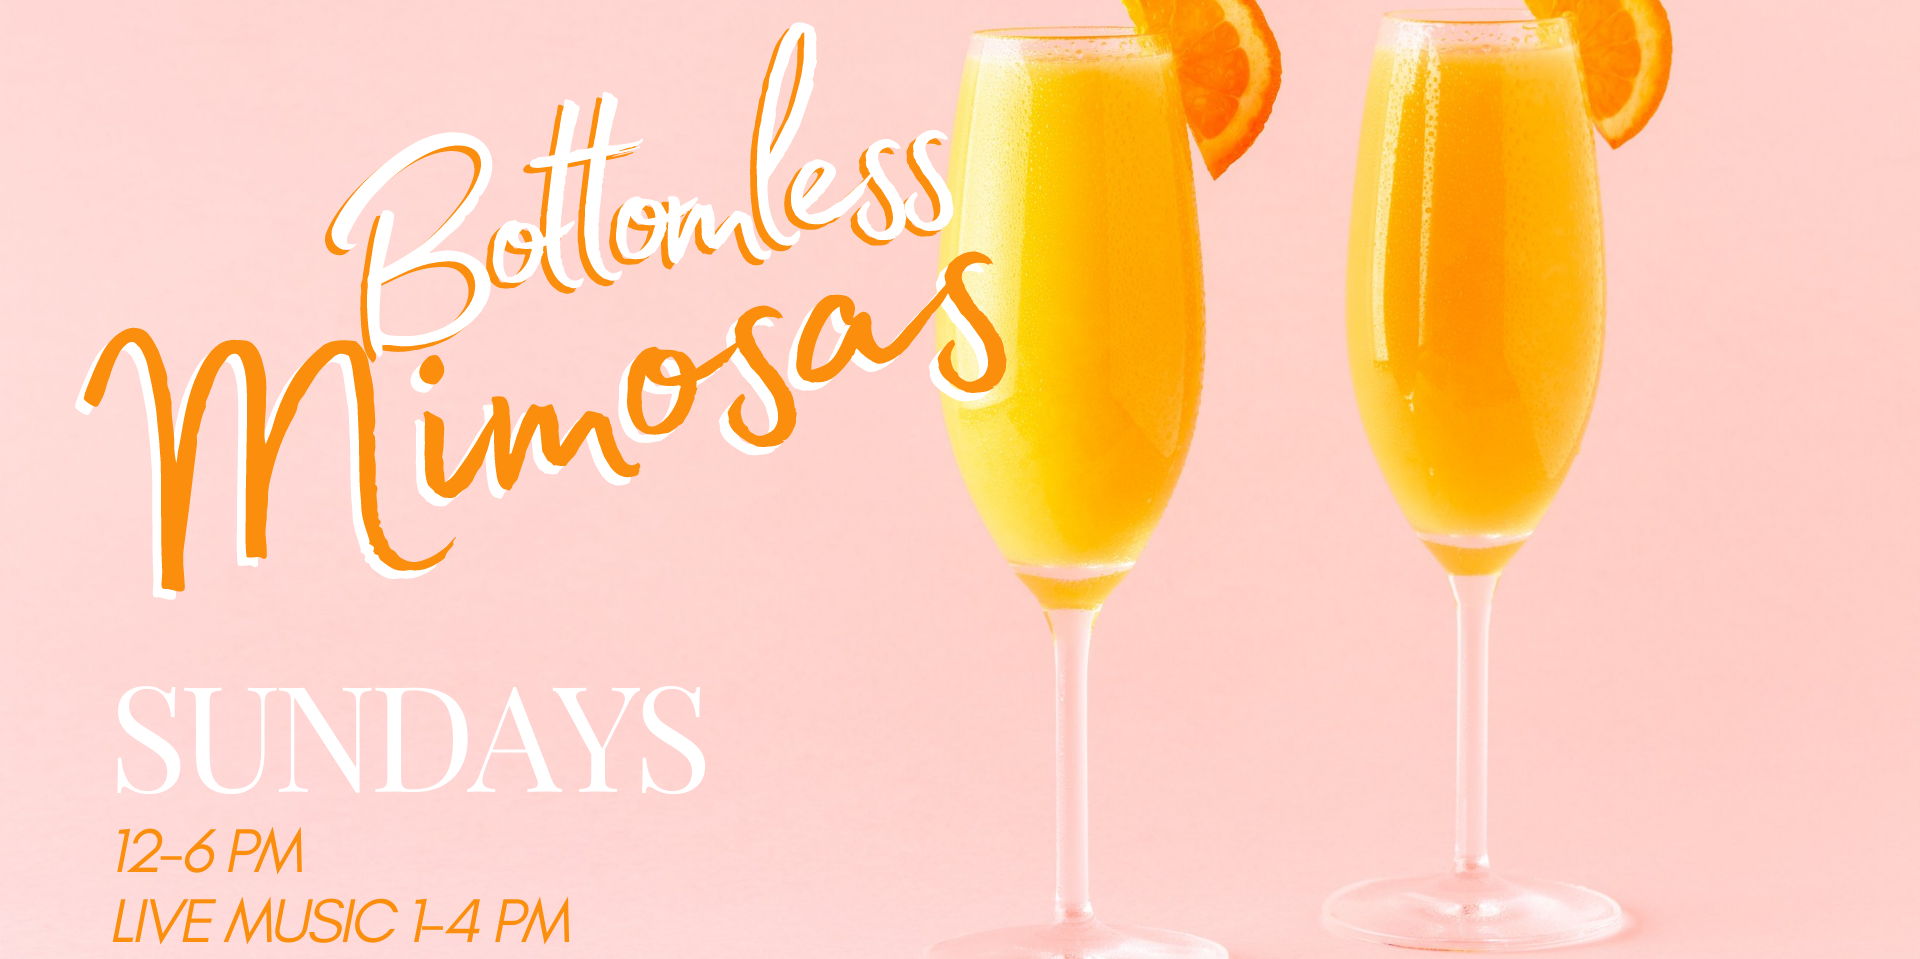 Bottomless Mimosas at Daniel's Vineyard promotional image